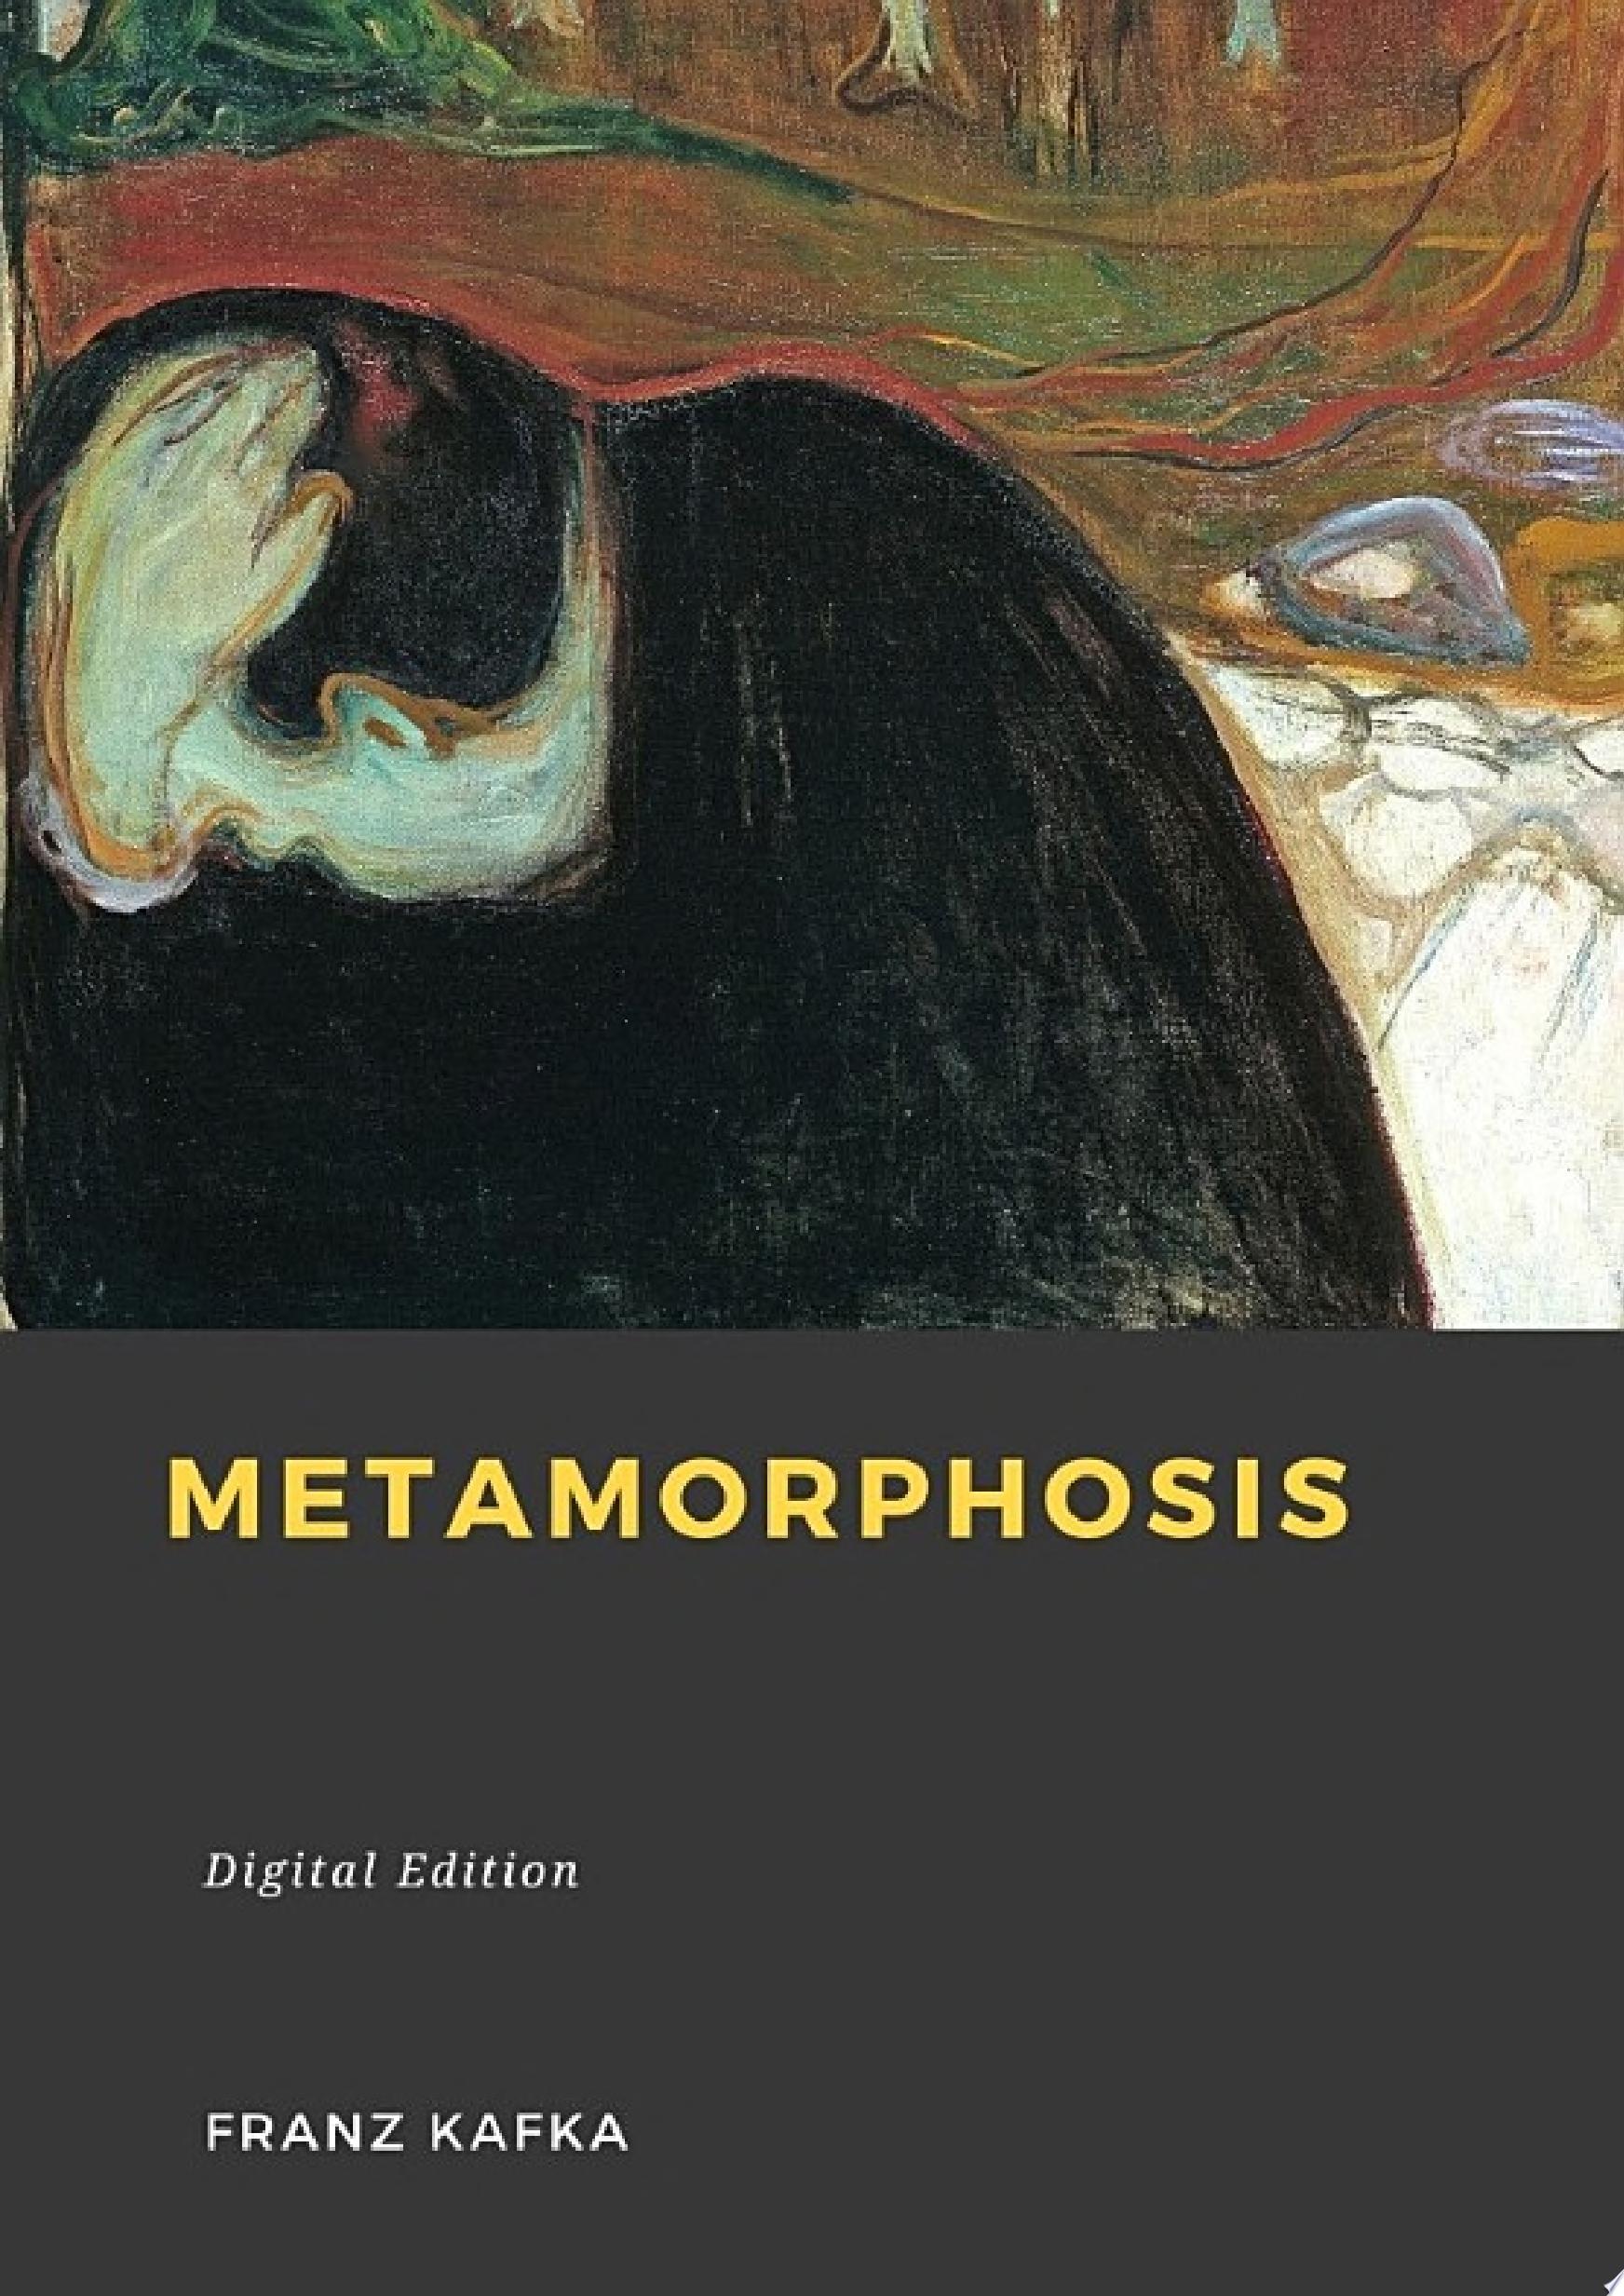 Image for "Metamorphosis"